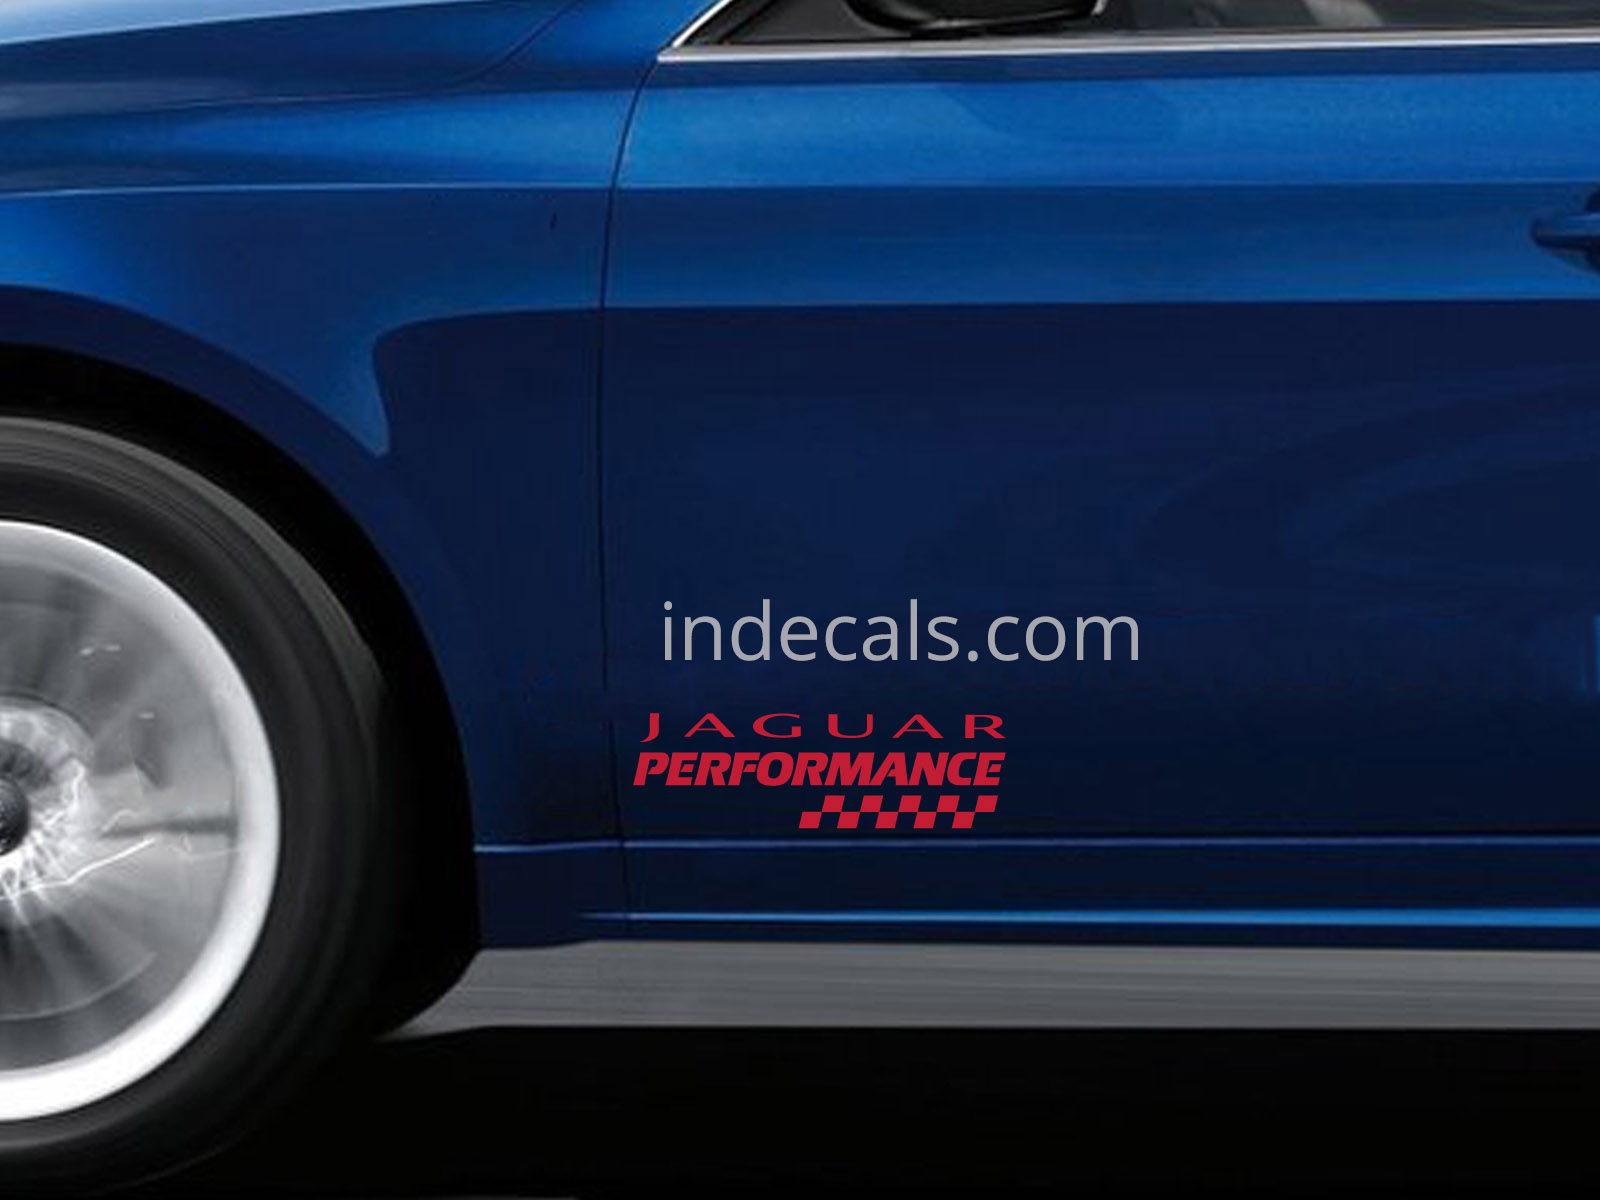 2 x Jaguar Performance Stickers for Doors - Red